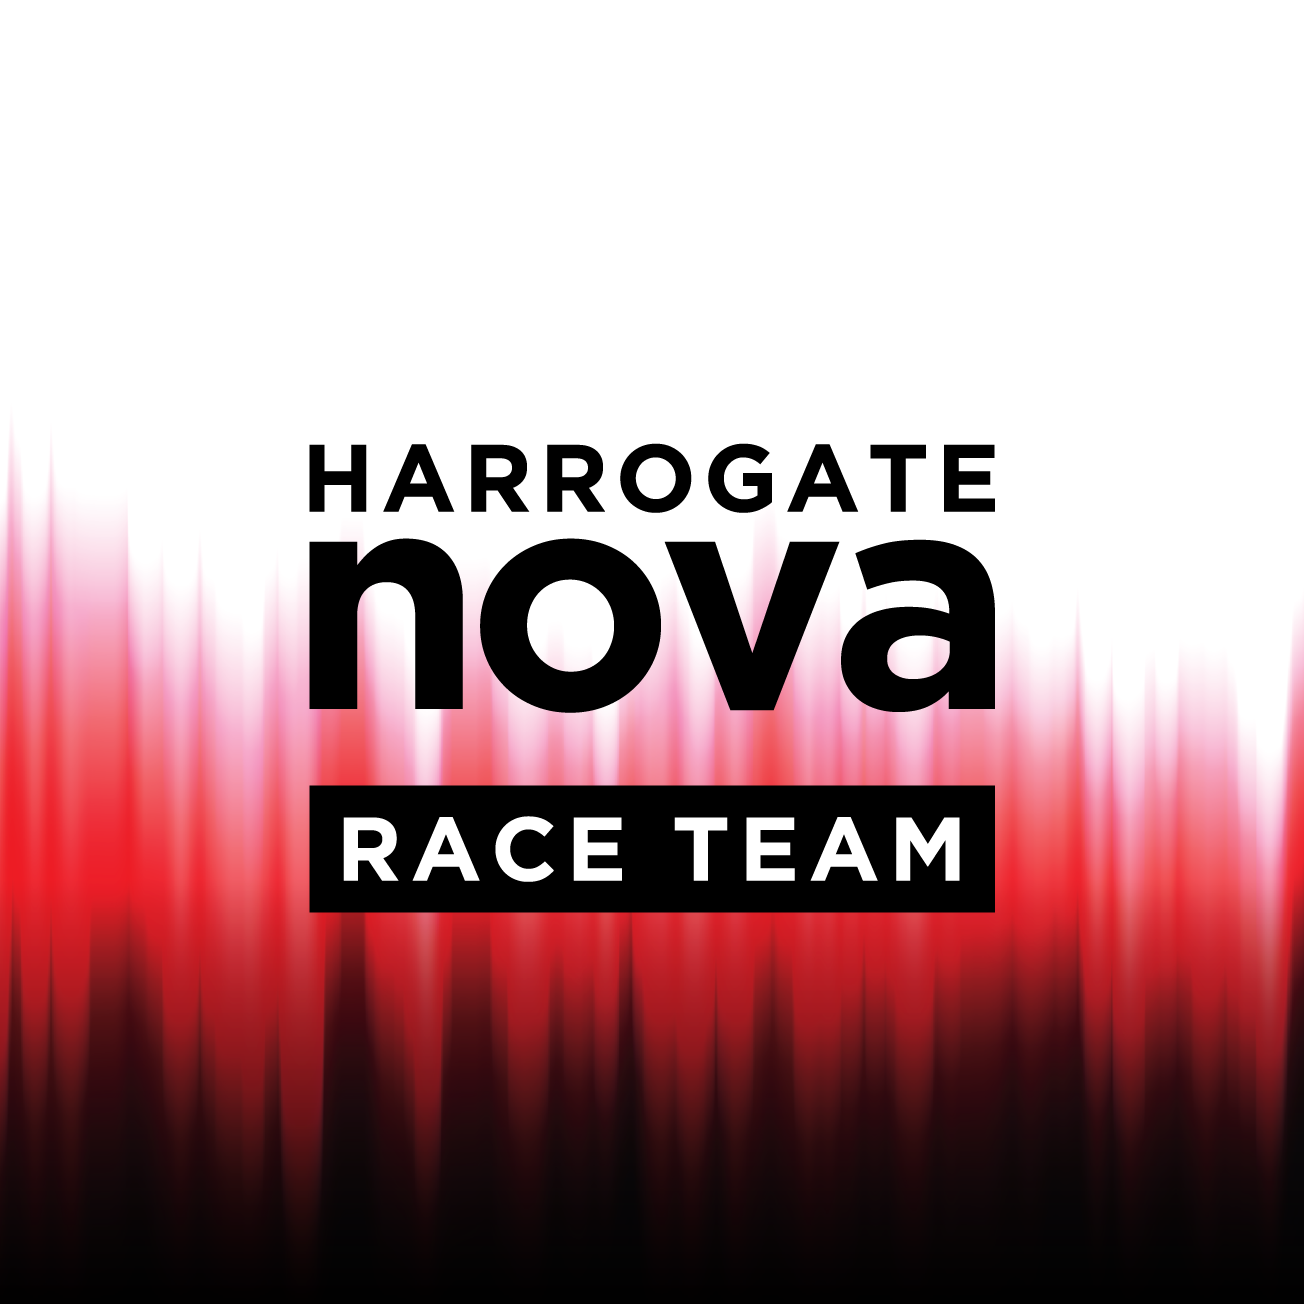 Club Image for HARROGATE NOVA U23